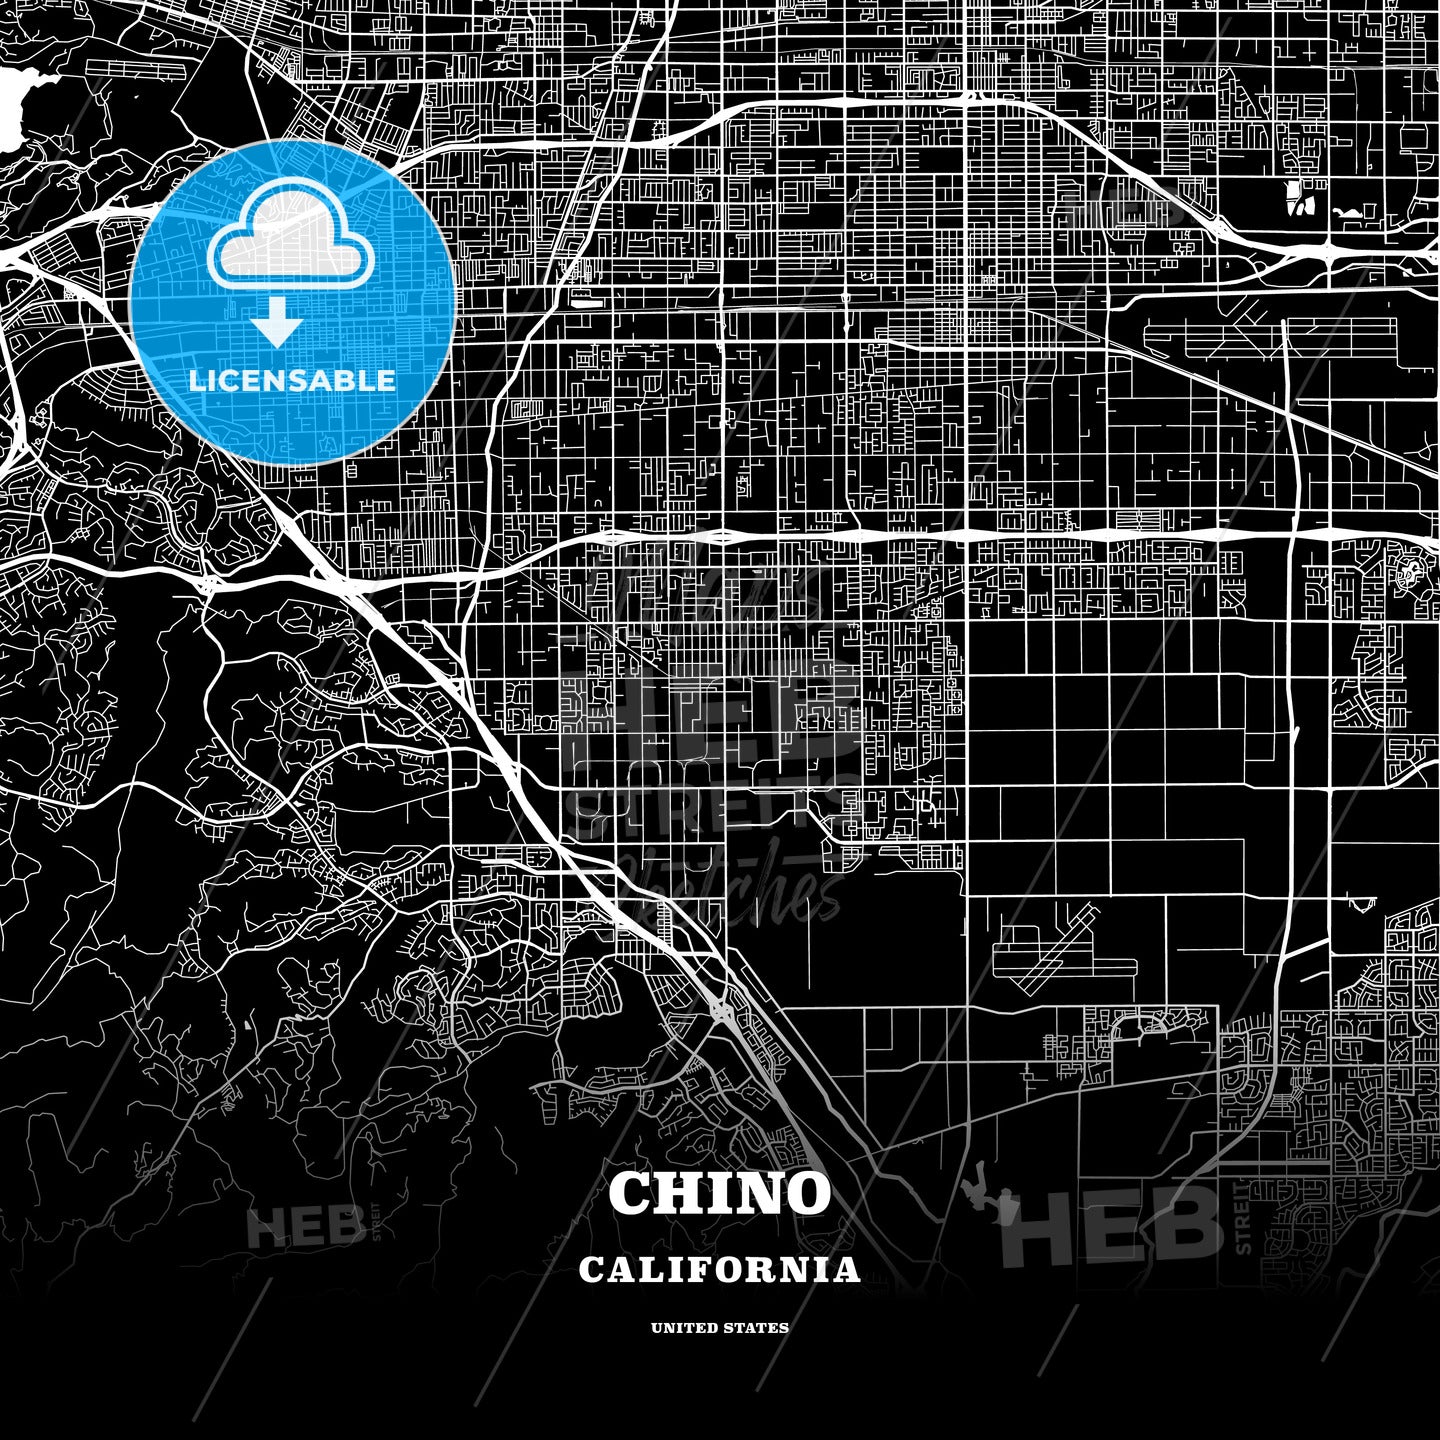 Chino, California, USA map